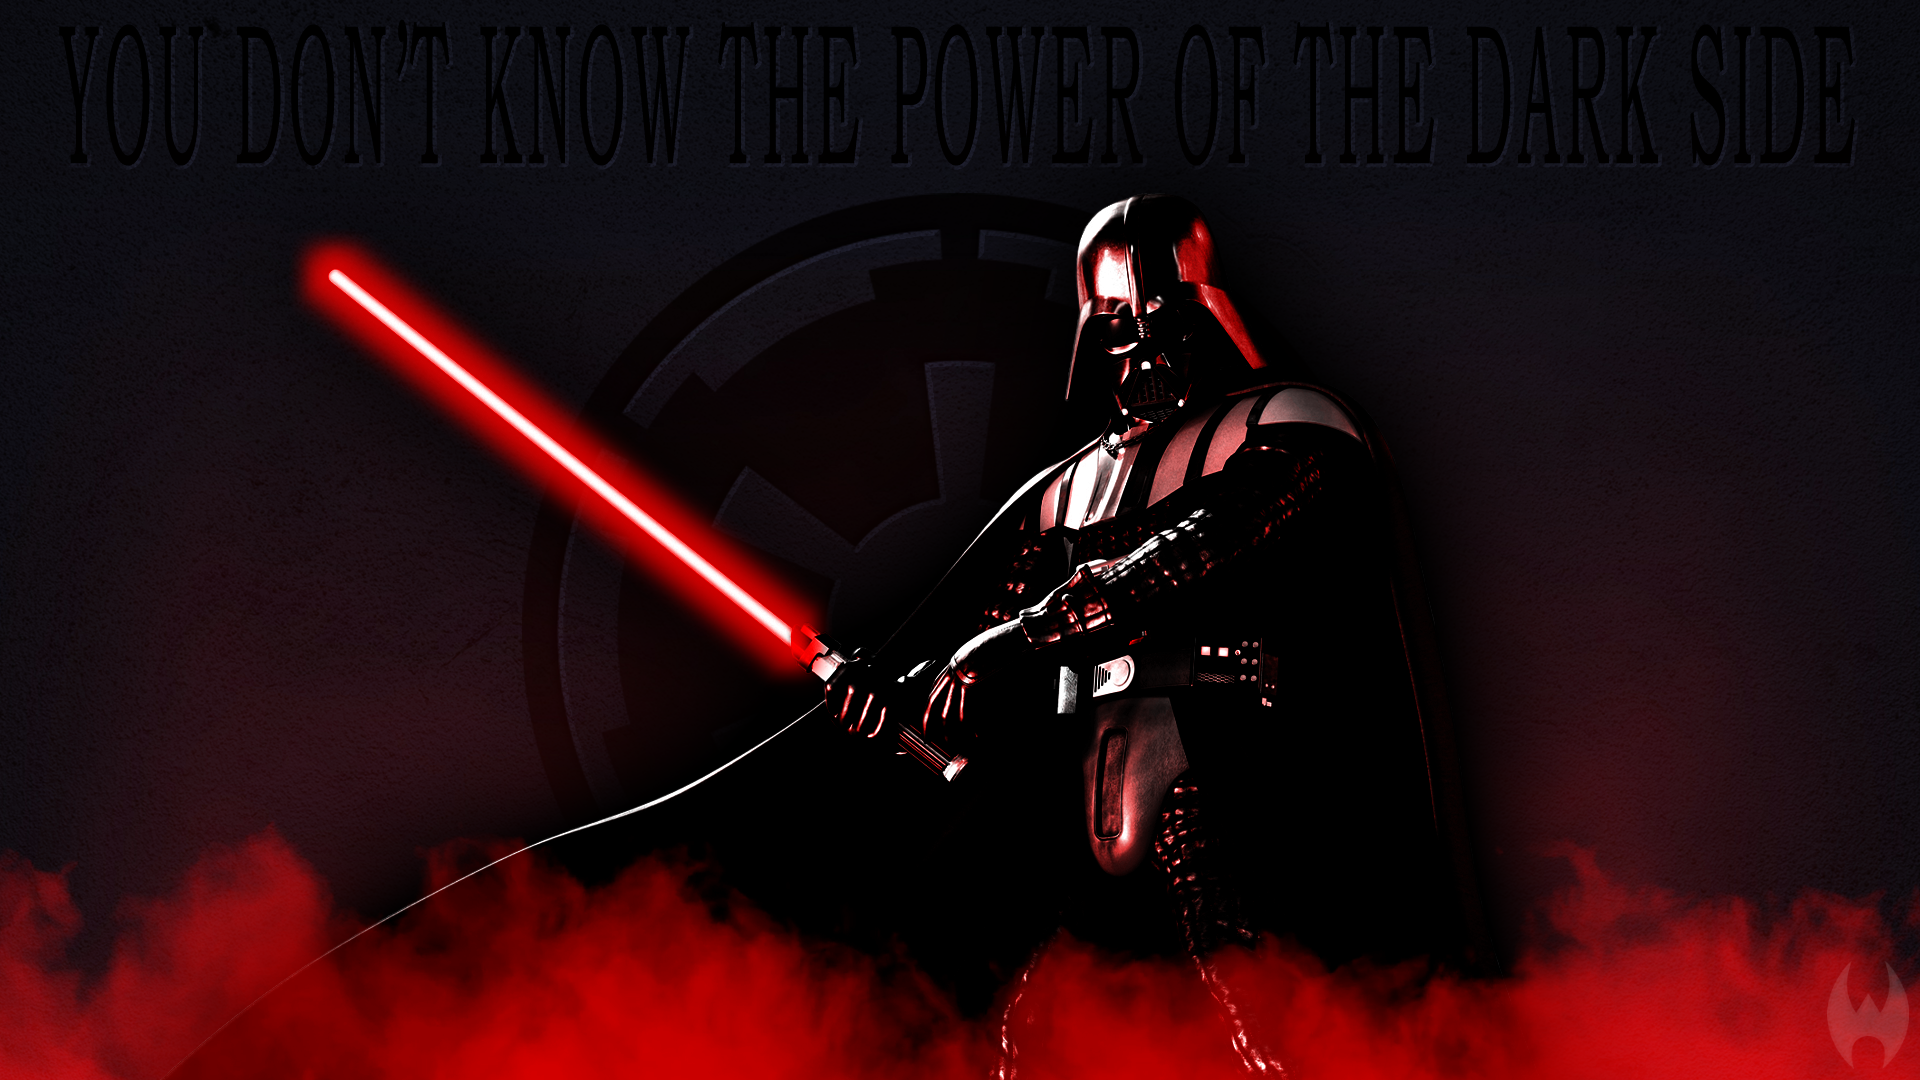 Darth Vader Wars Sith Lord .wallpapertip.com